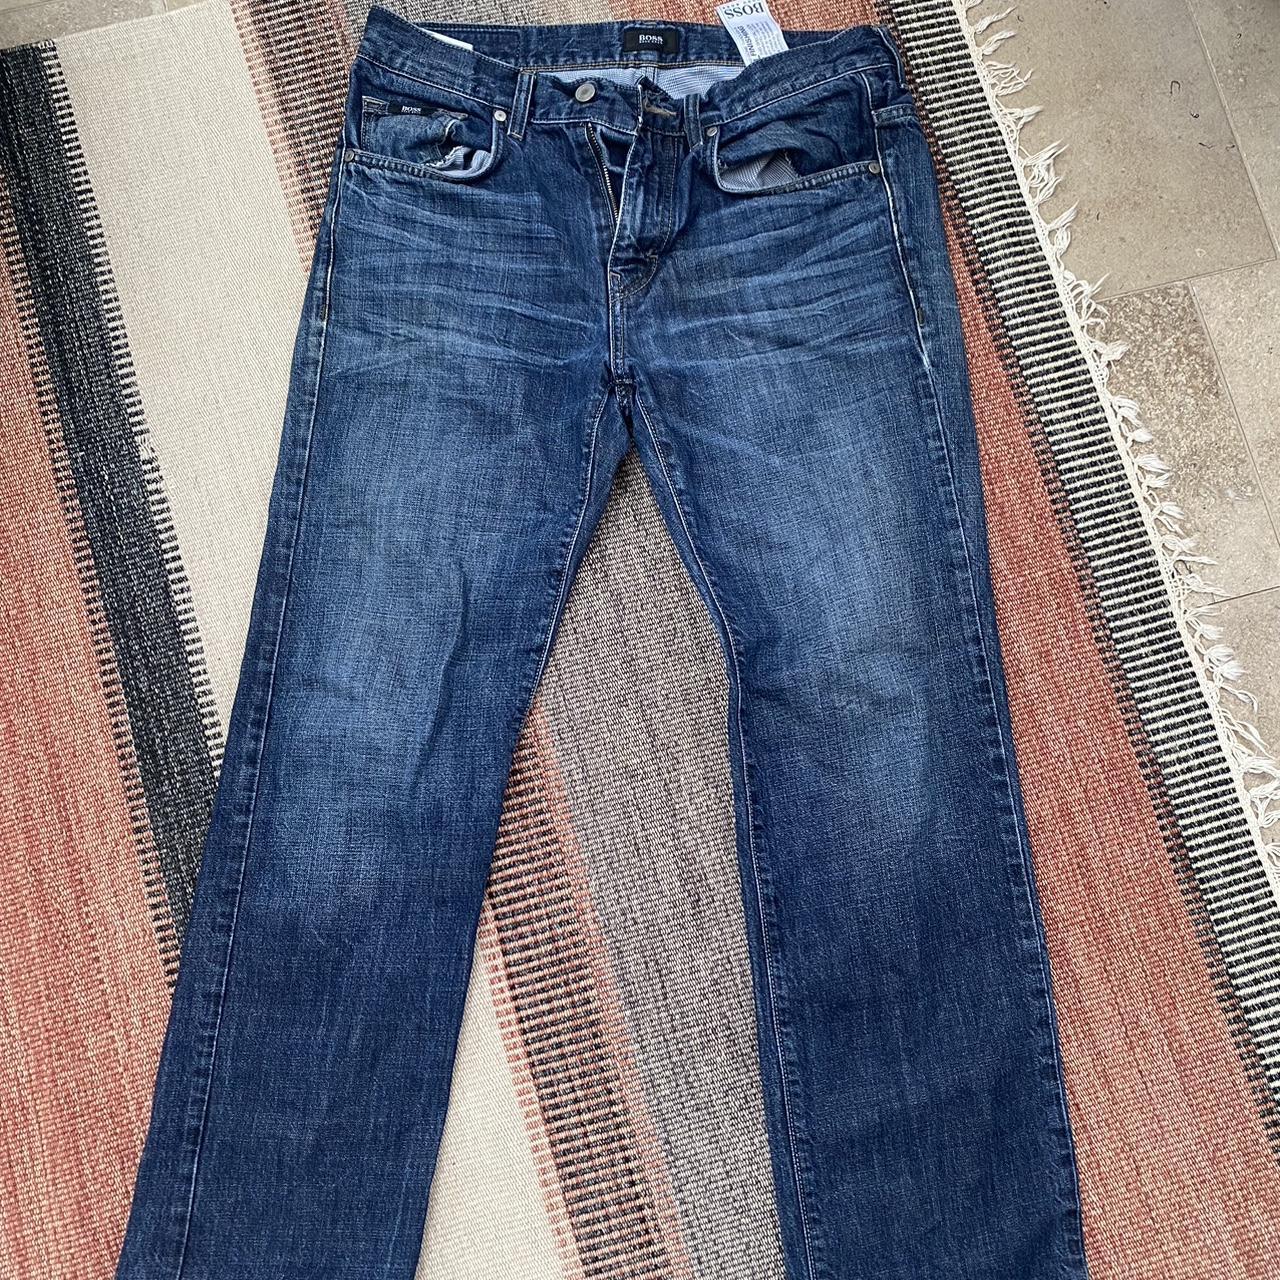 Hugo boss dark jeans, 32/30 - Depop